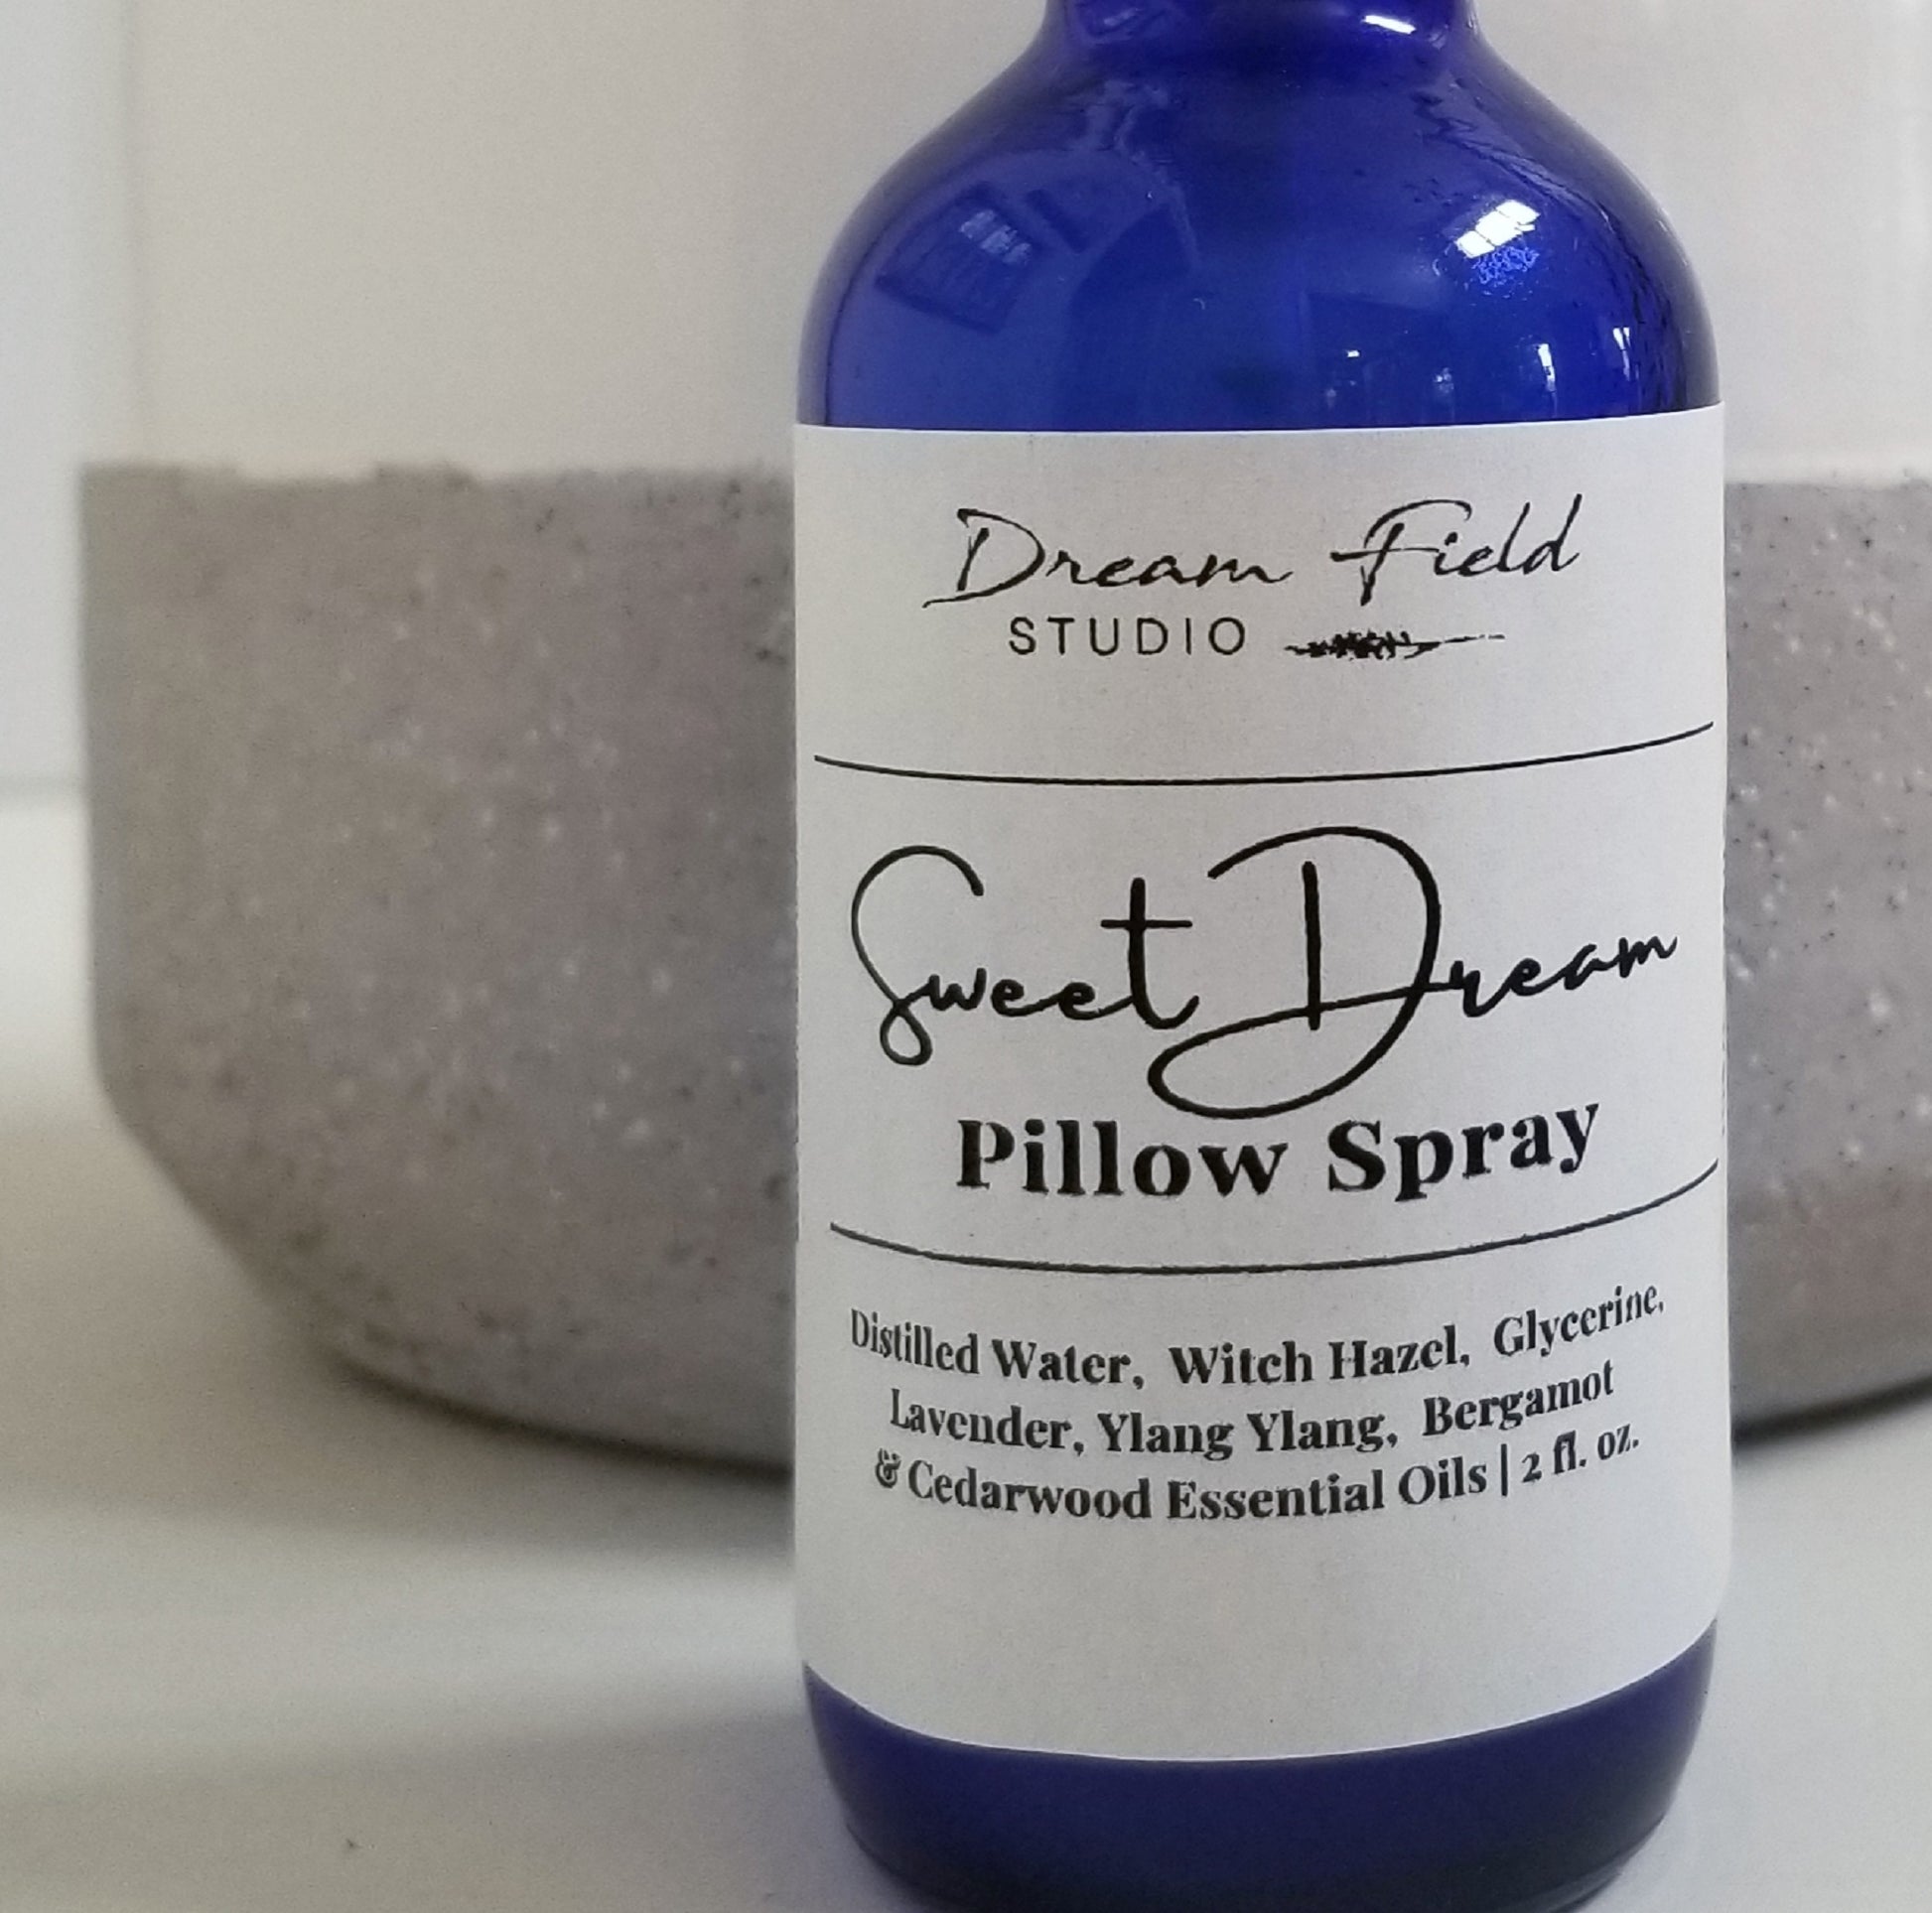 Sweet Dream Pillow Mist in cobalt blue glass bottle